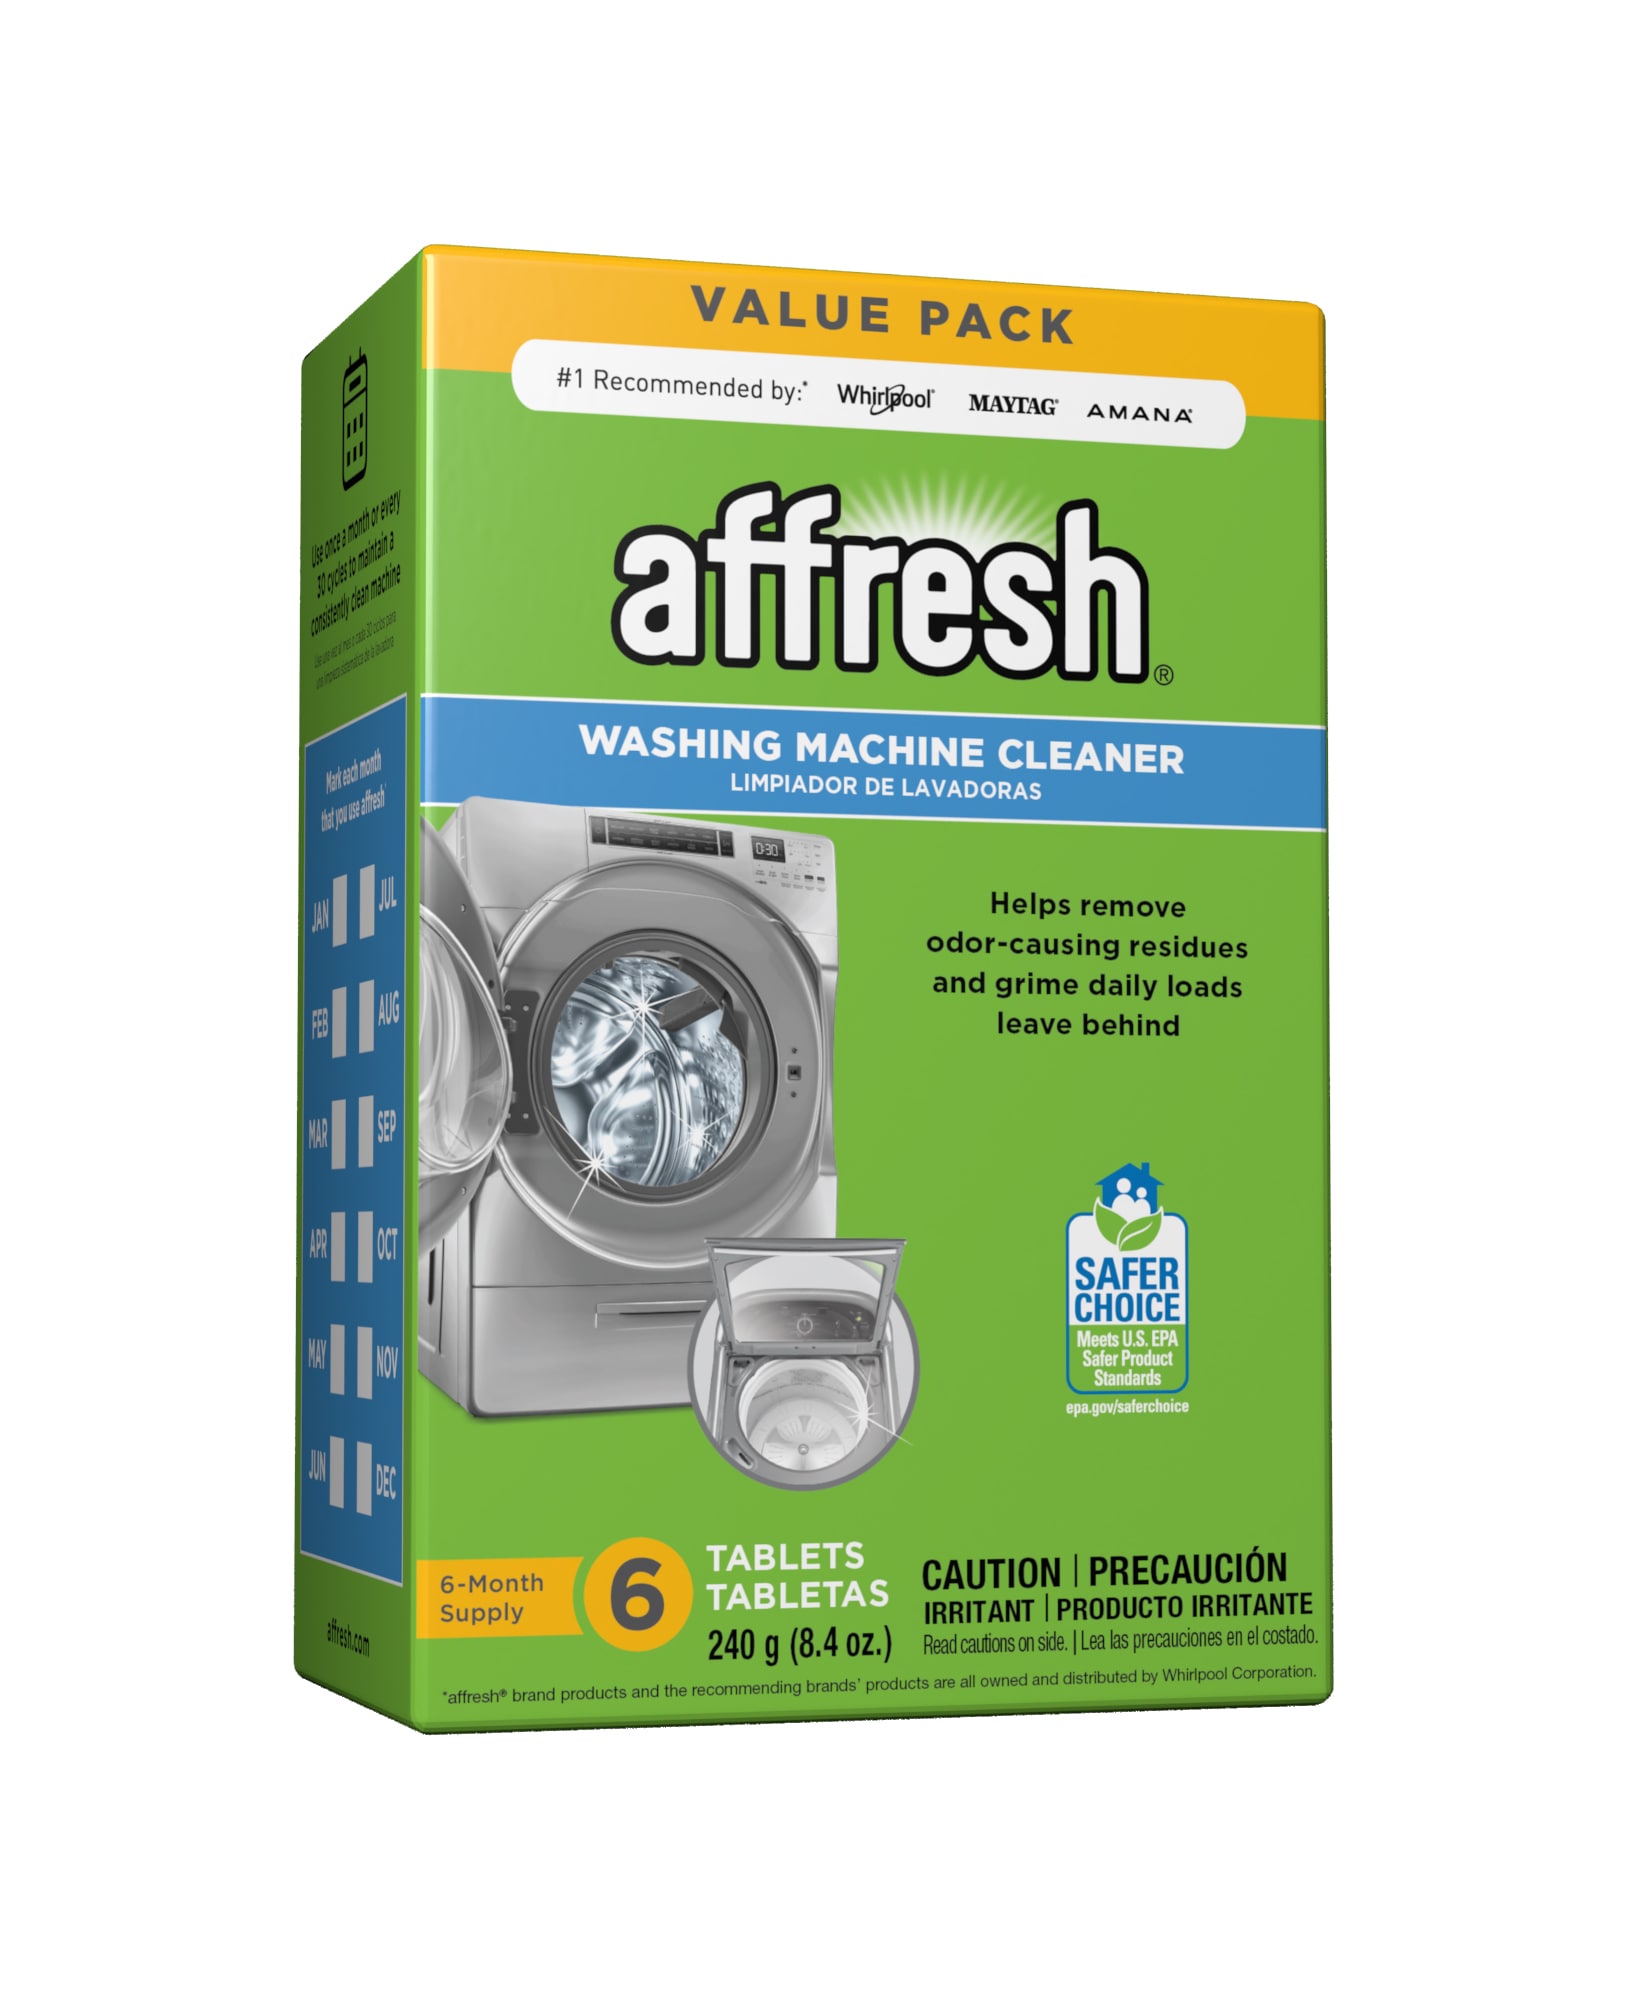 SDS affresh Ice Machine Cleaner 2.0 - affresh® appliance care